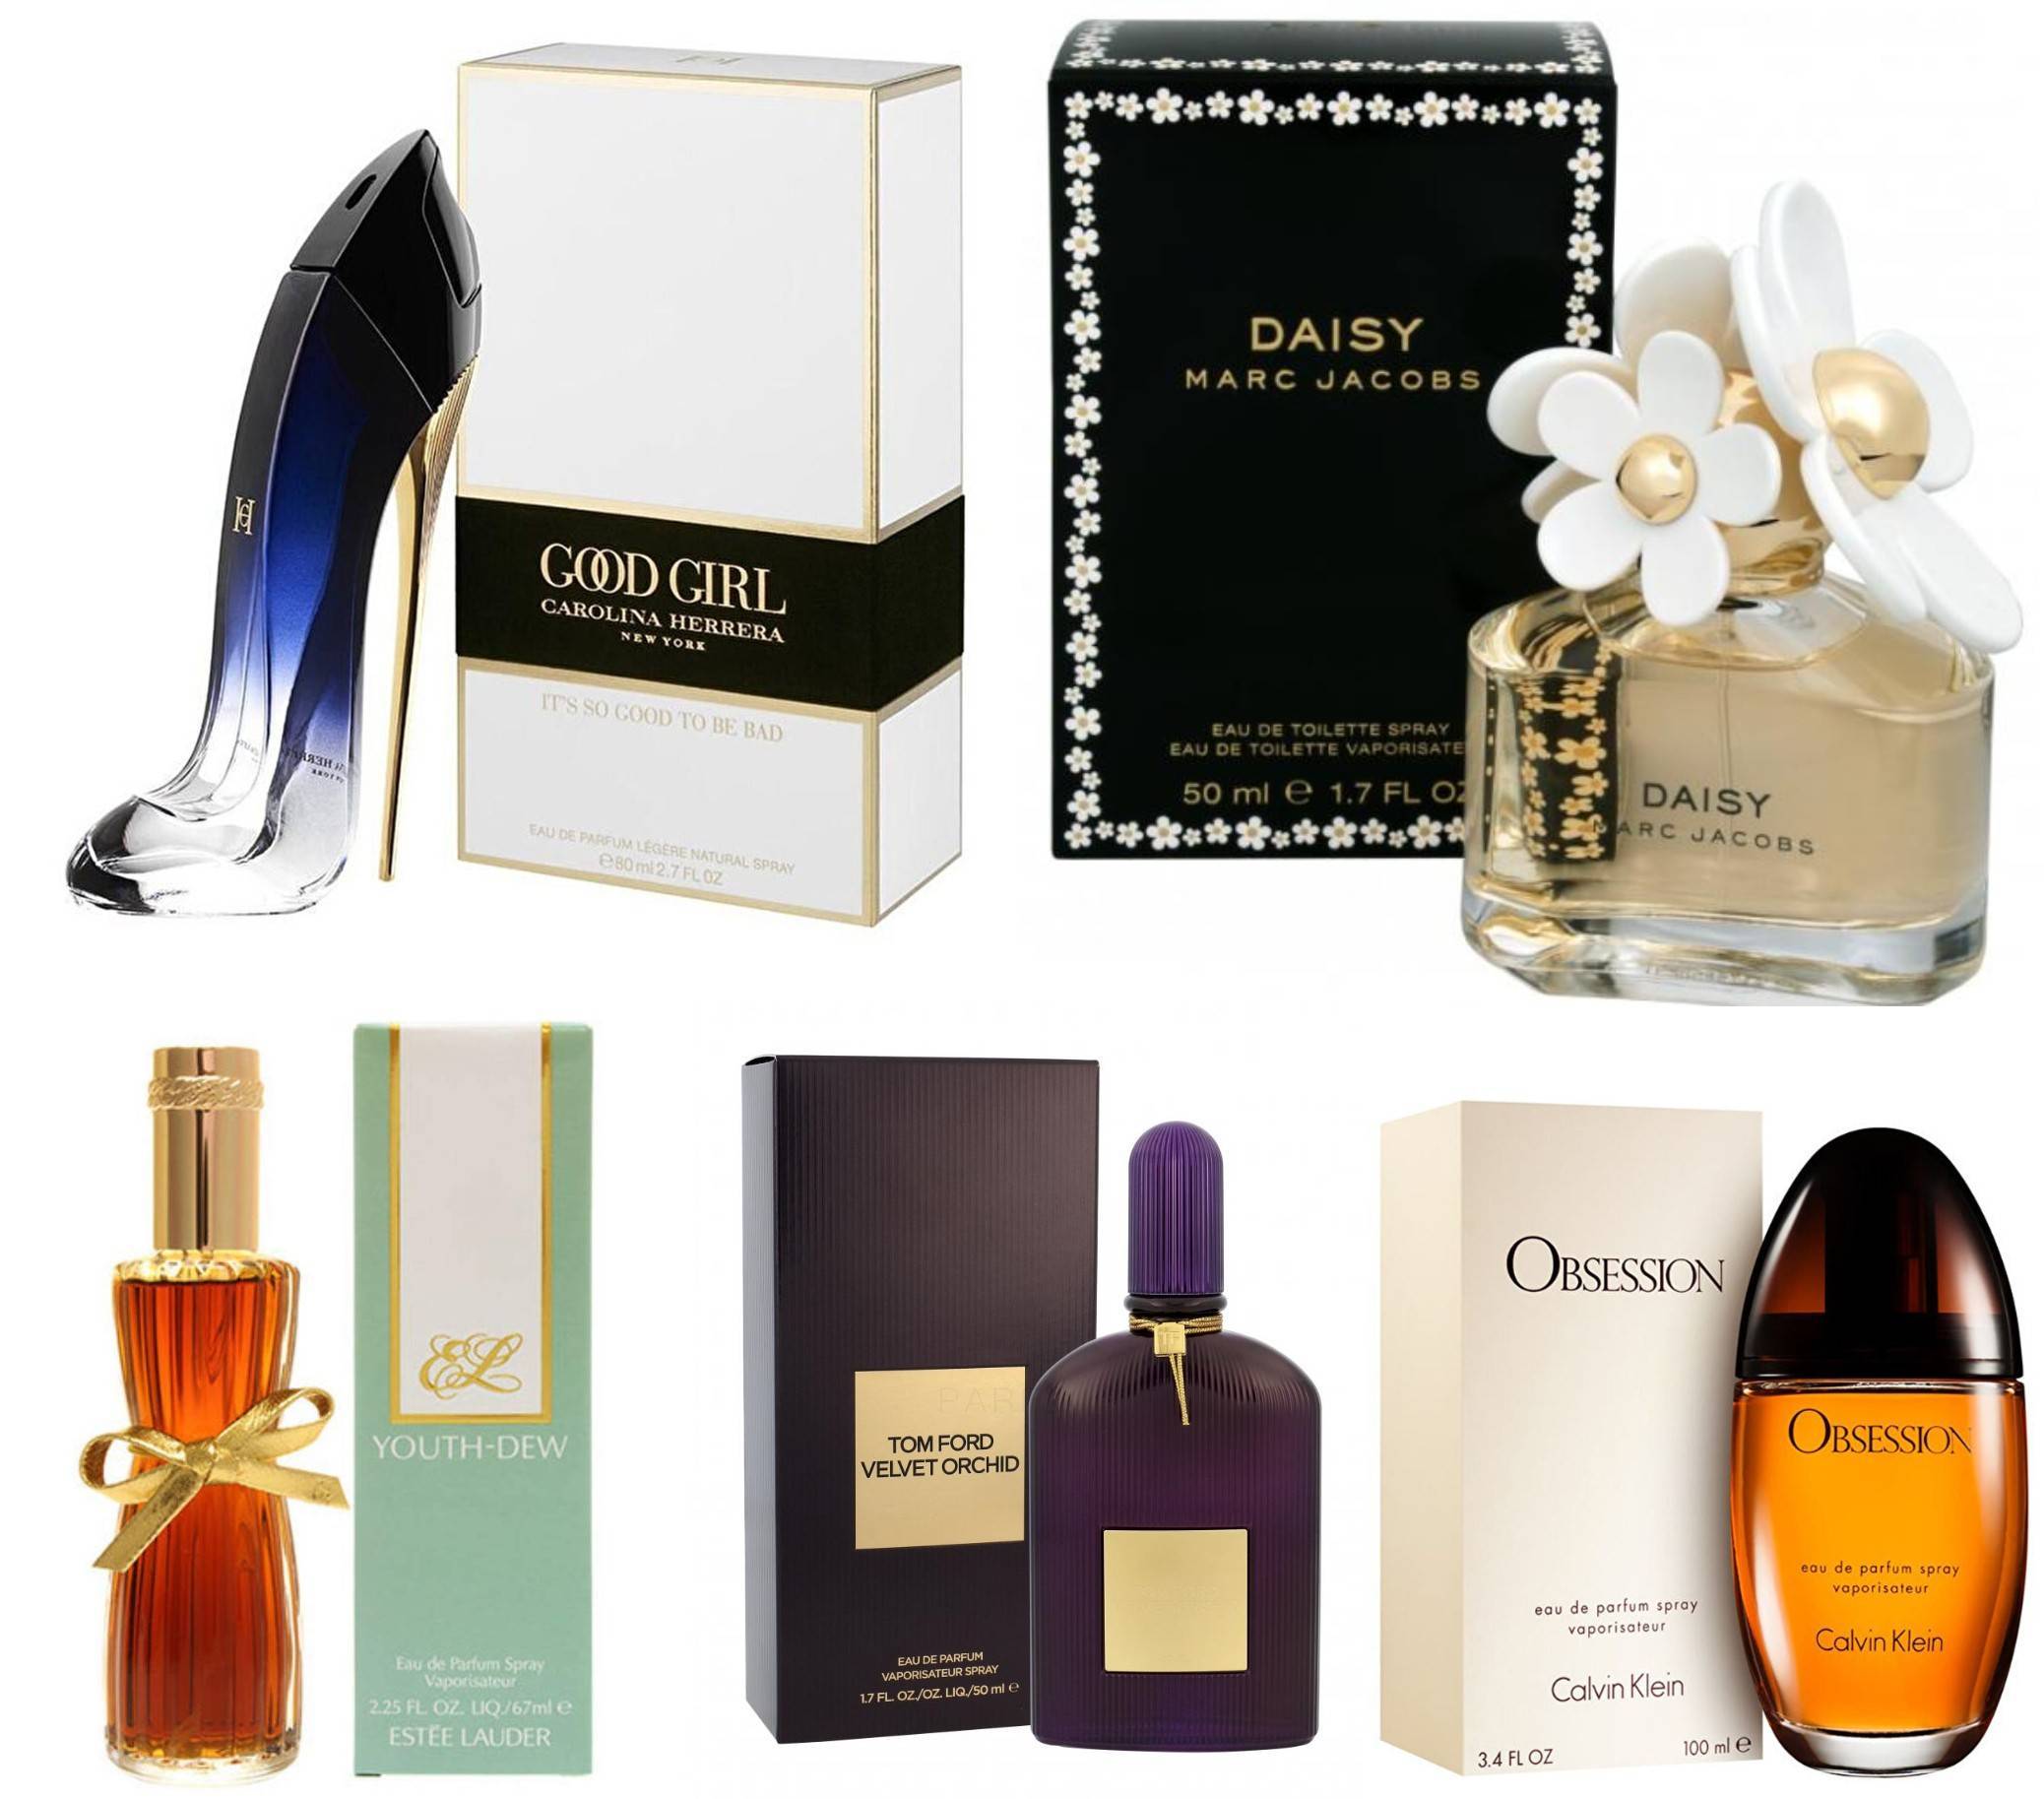 Cele mai bune brand-uri de parfumuri din Statele Unite ale Americii. Tom Ford și Carolina Herrera dețin primele locuri